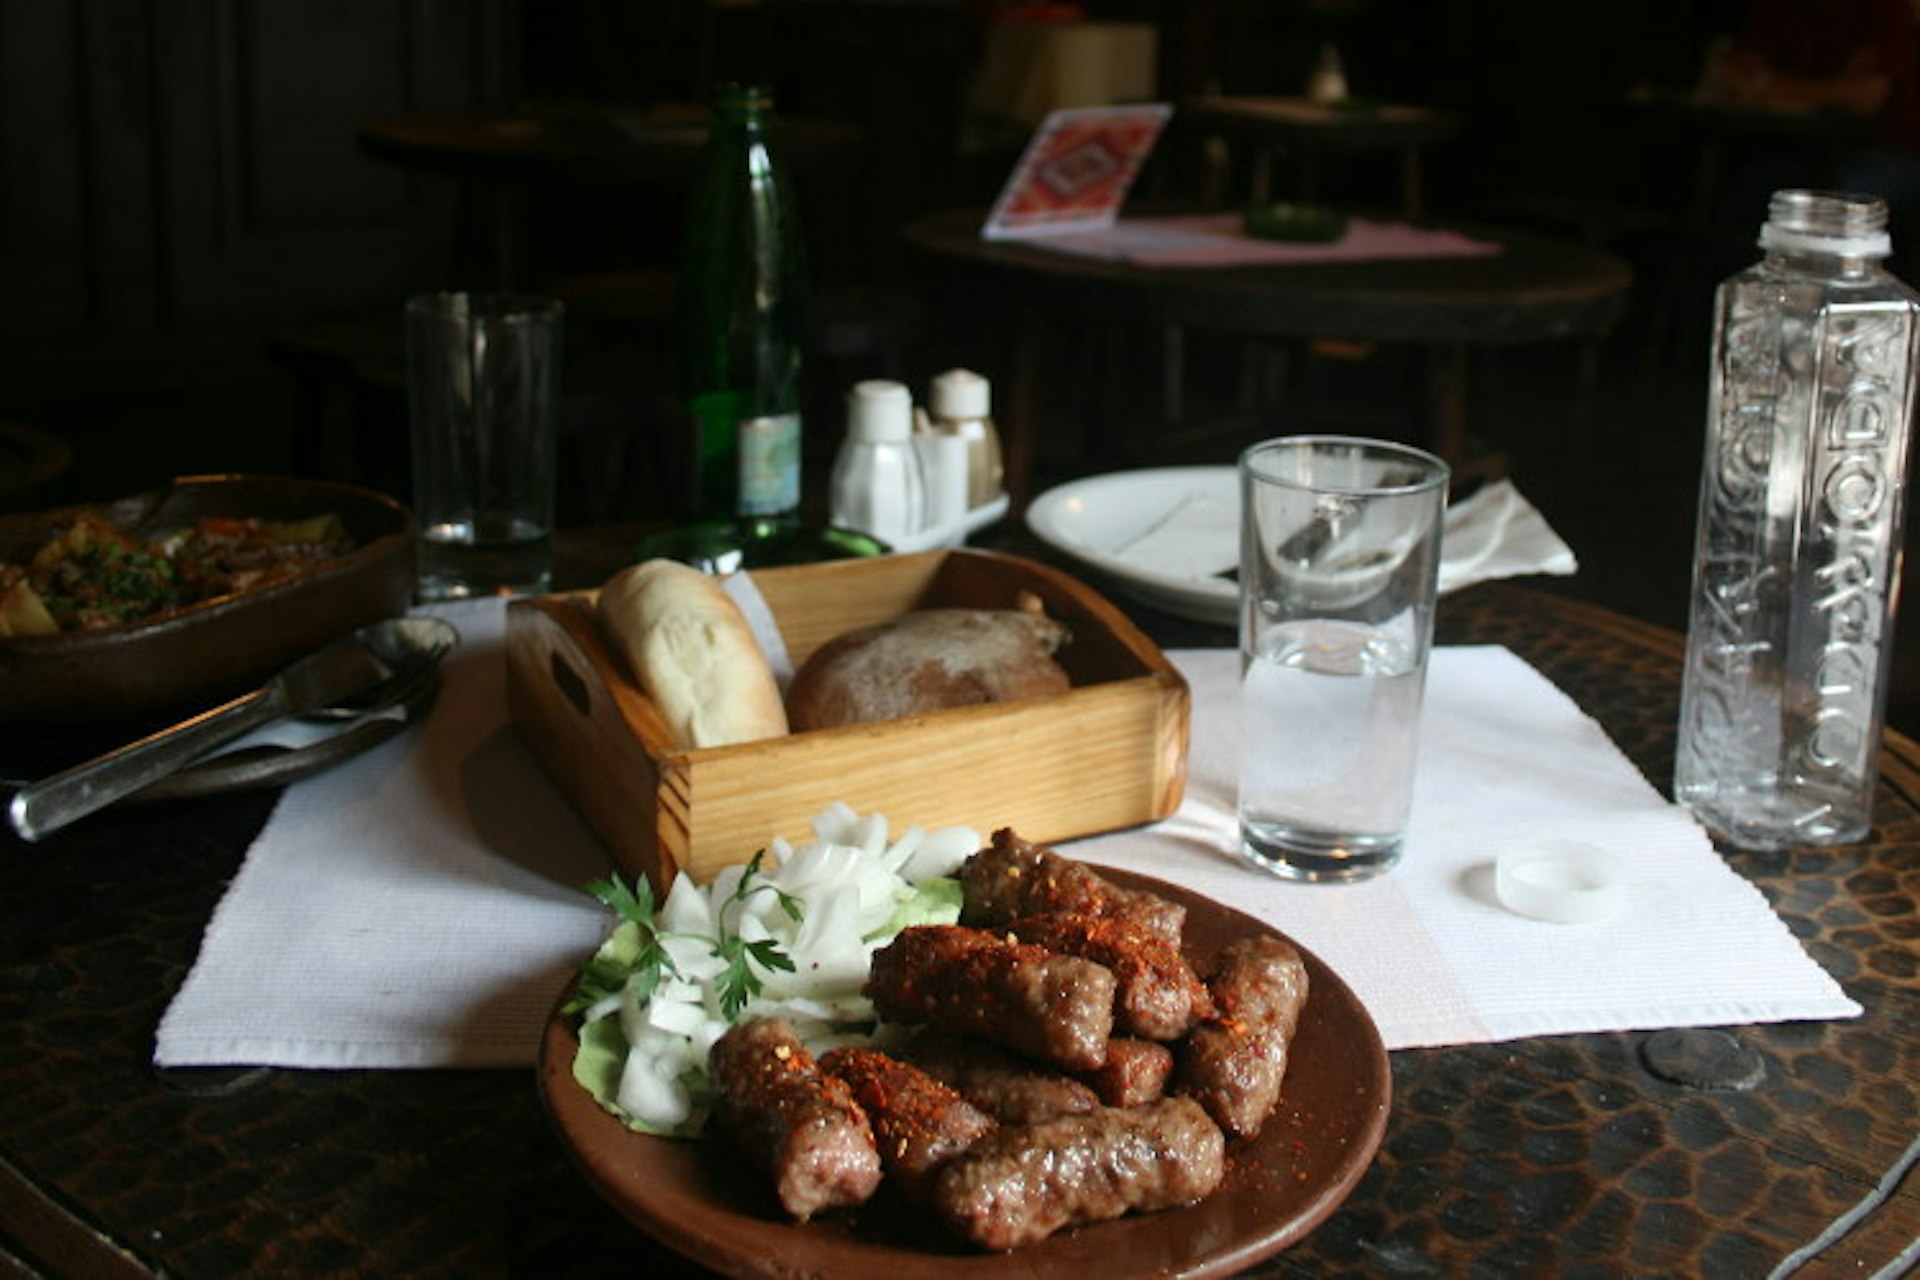 Serbian food classic, ćevapčići with onions. Image by Rain Rannu / CC BY 2.0